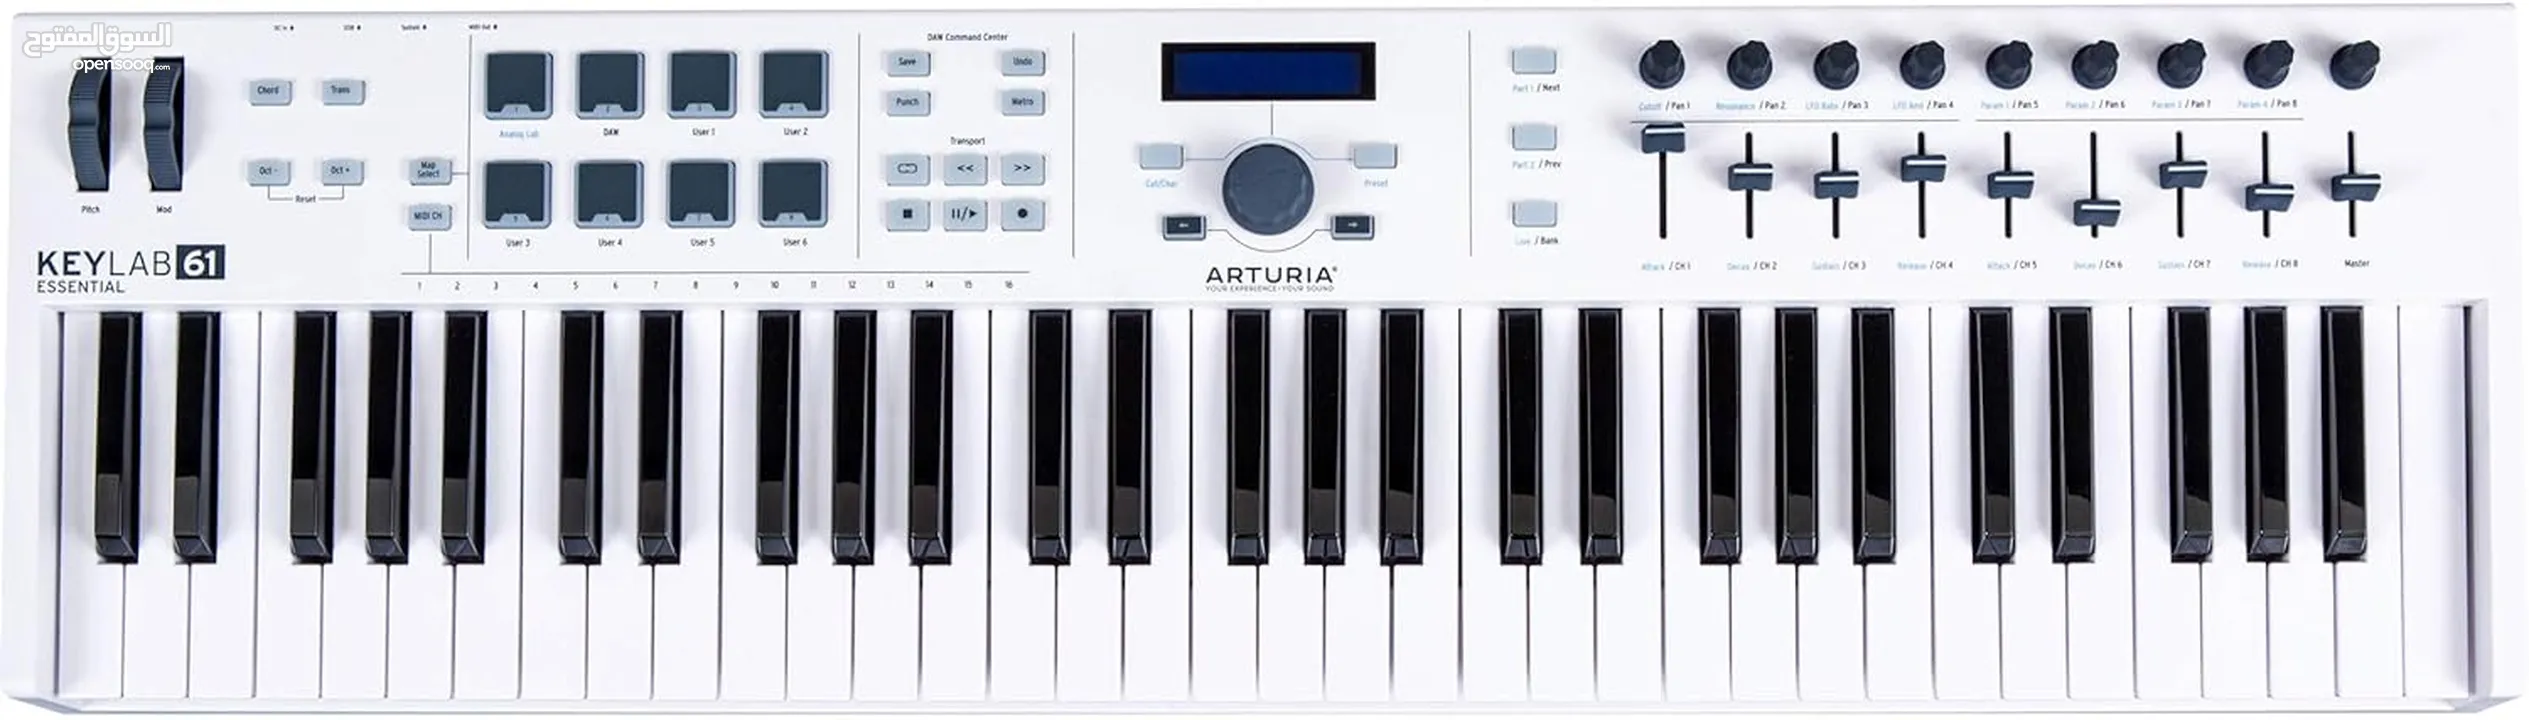 Arturia - Native Instruments Midi Keyboard